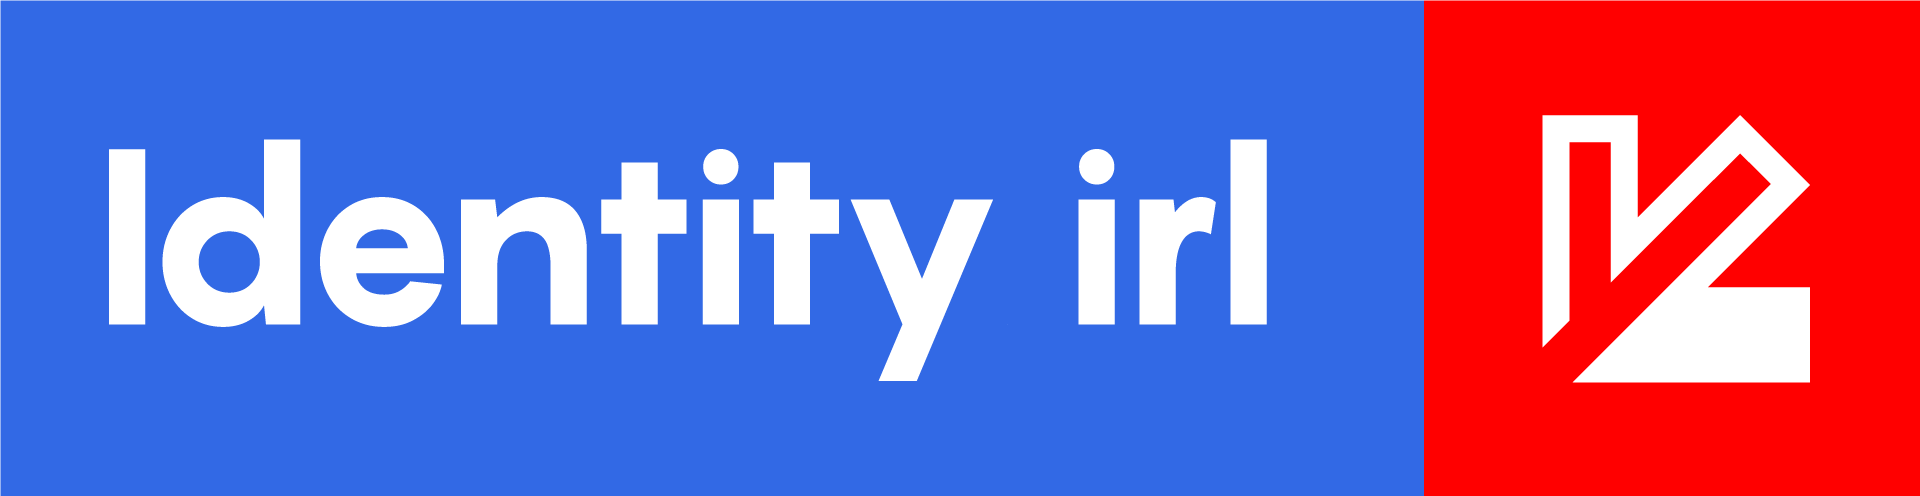 City Mall - Brand Identity Upgrade